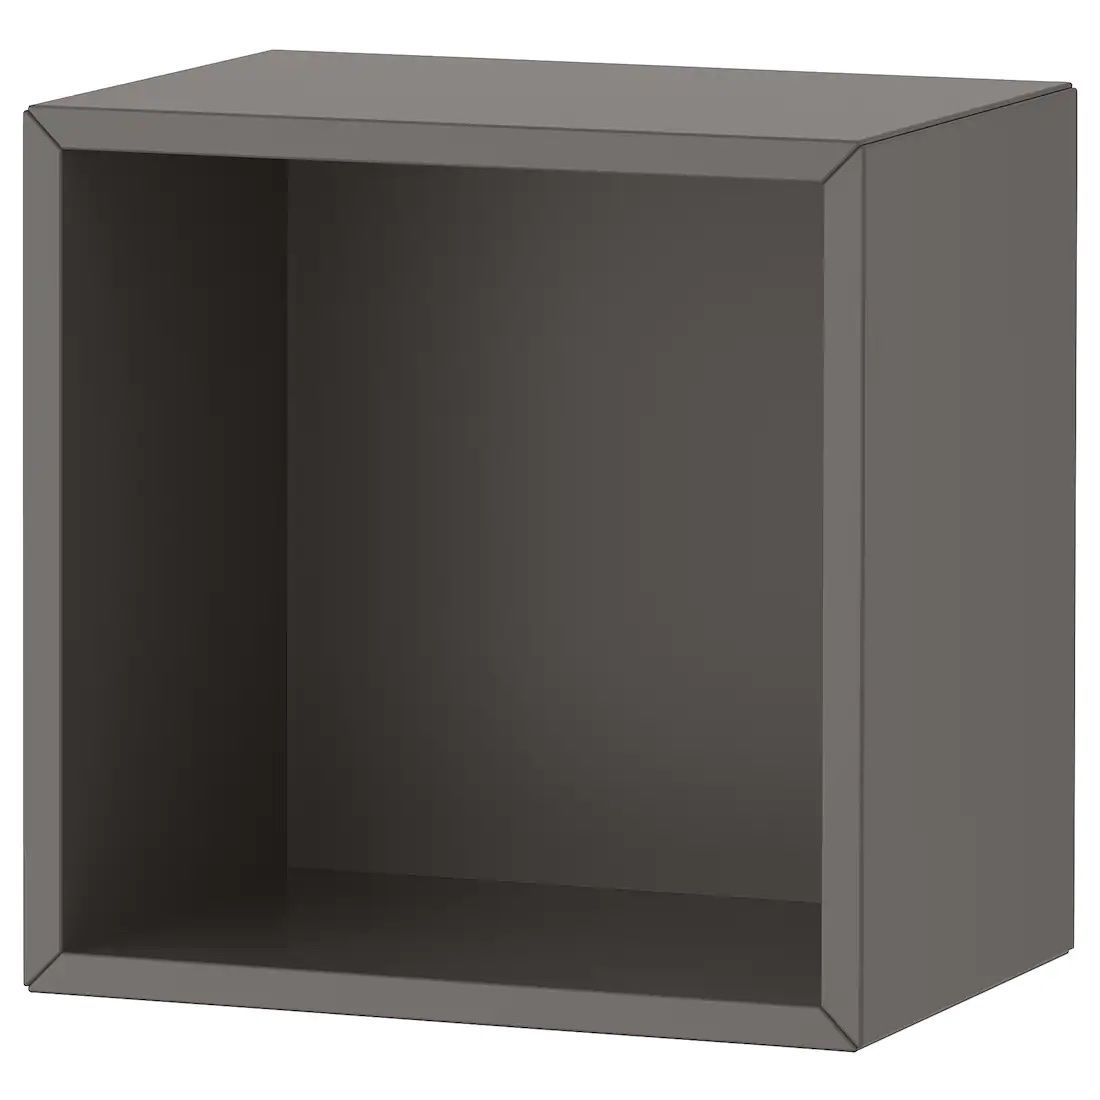 IKEA Eket Cabinet, Dark Gray x 3